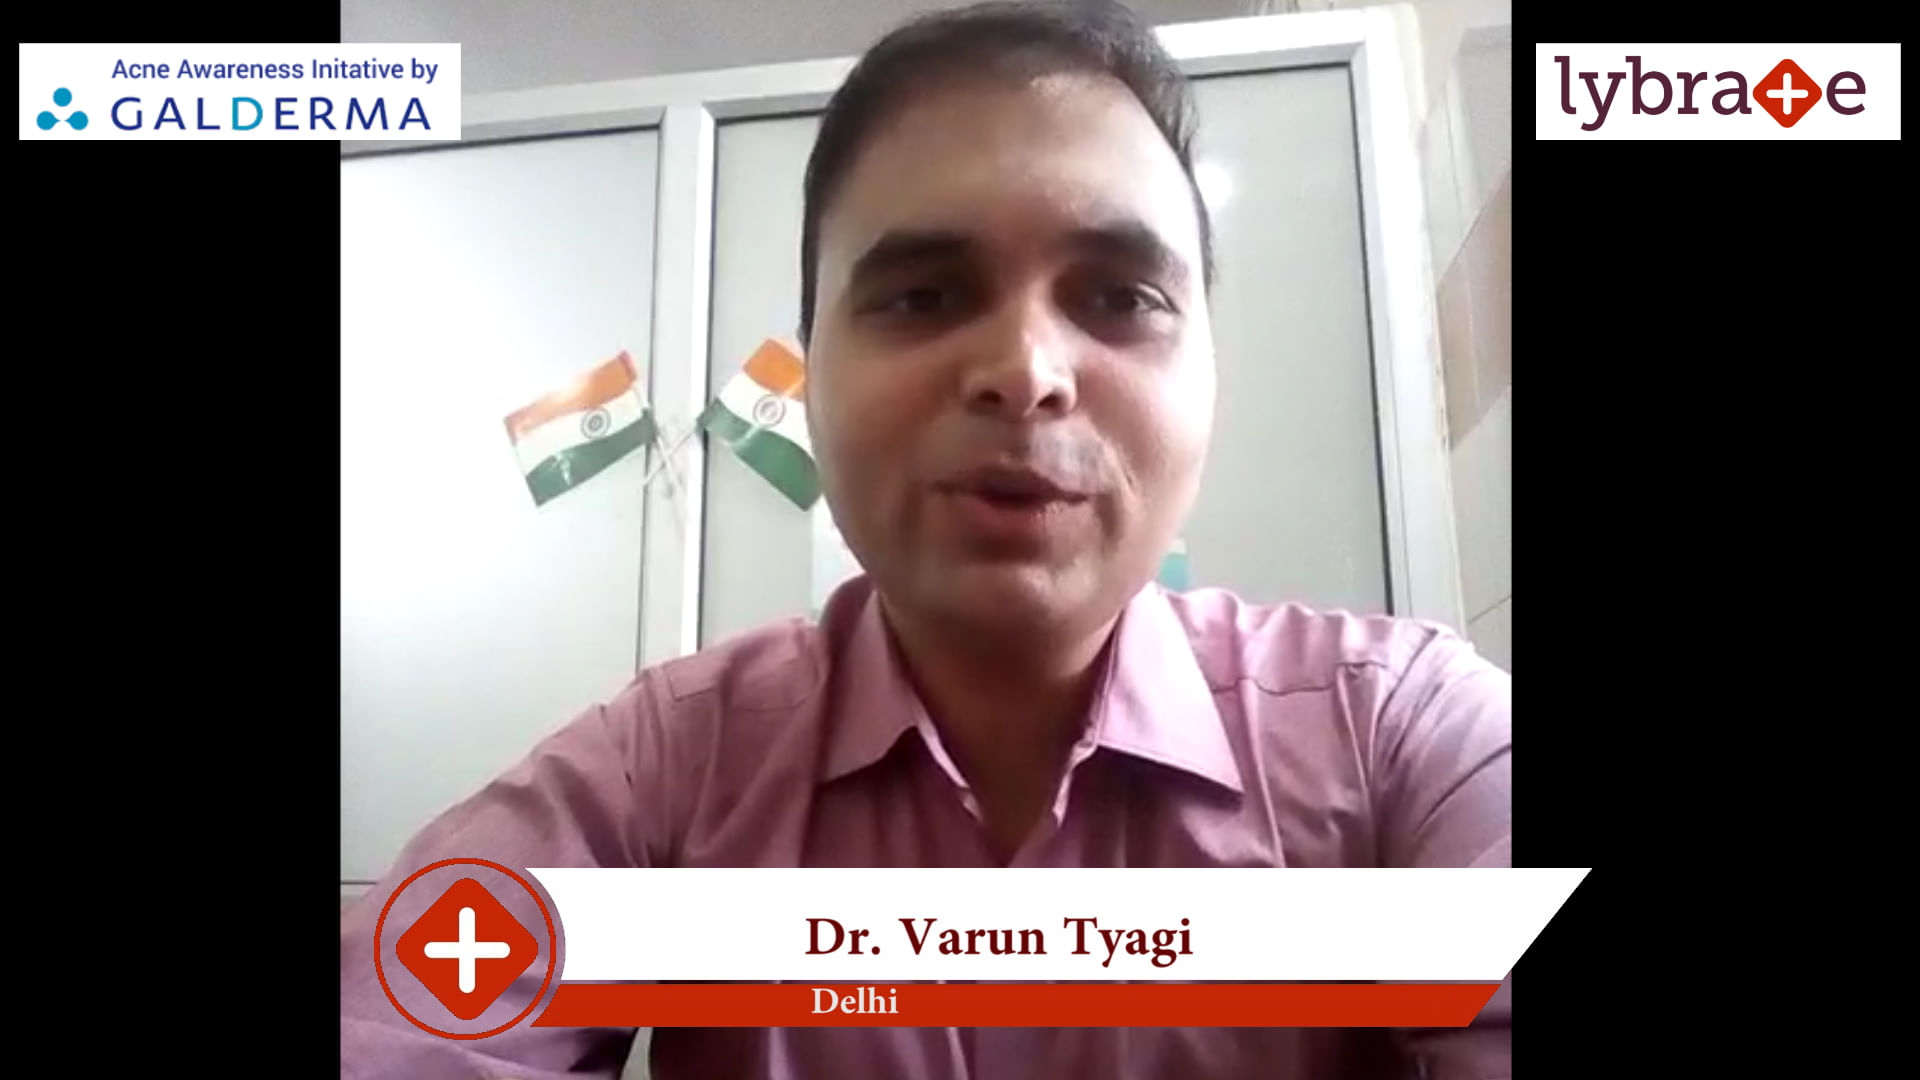 Lybrate | Dr. Varun Tyagi speaks on IMPORTANCE OF TREATING ACNE EARLY